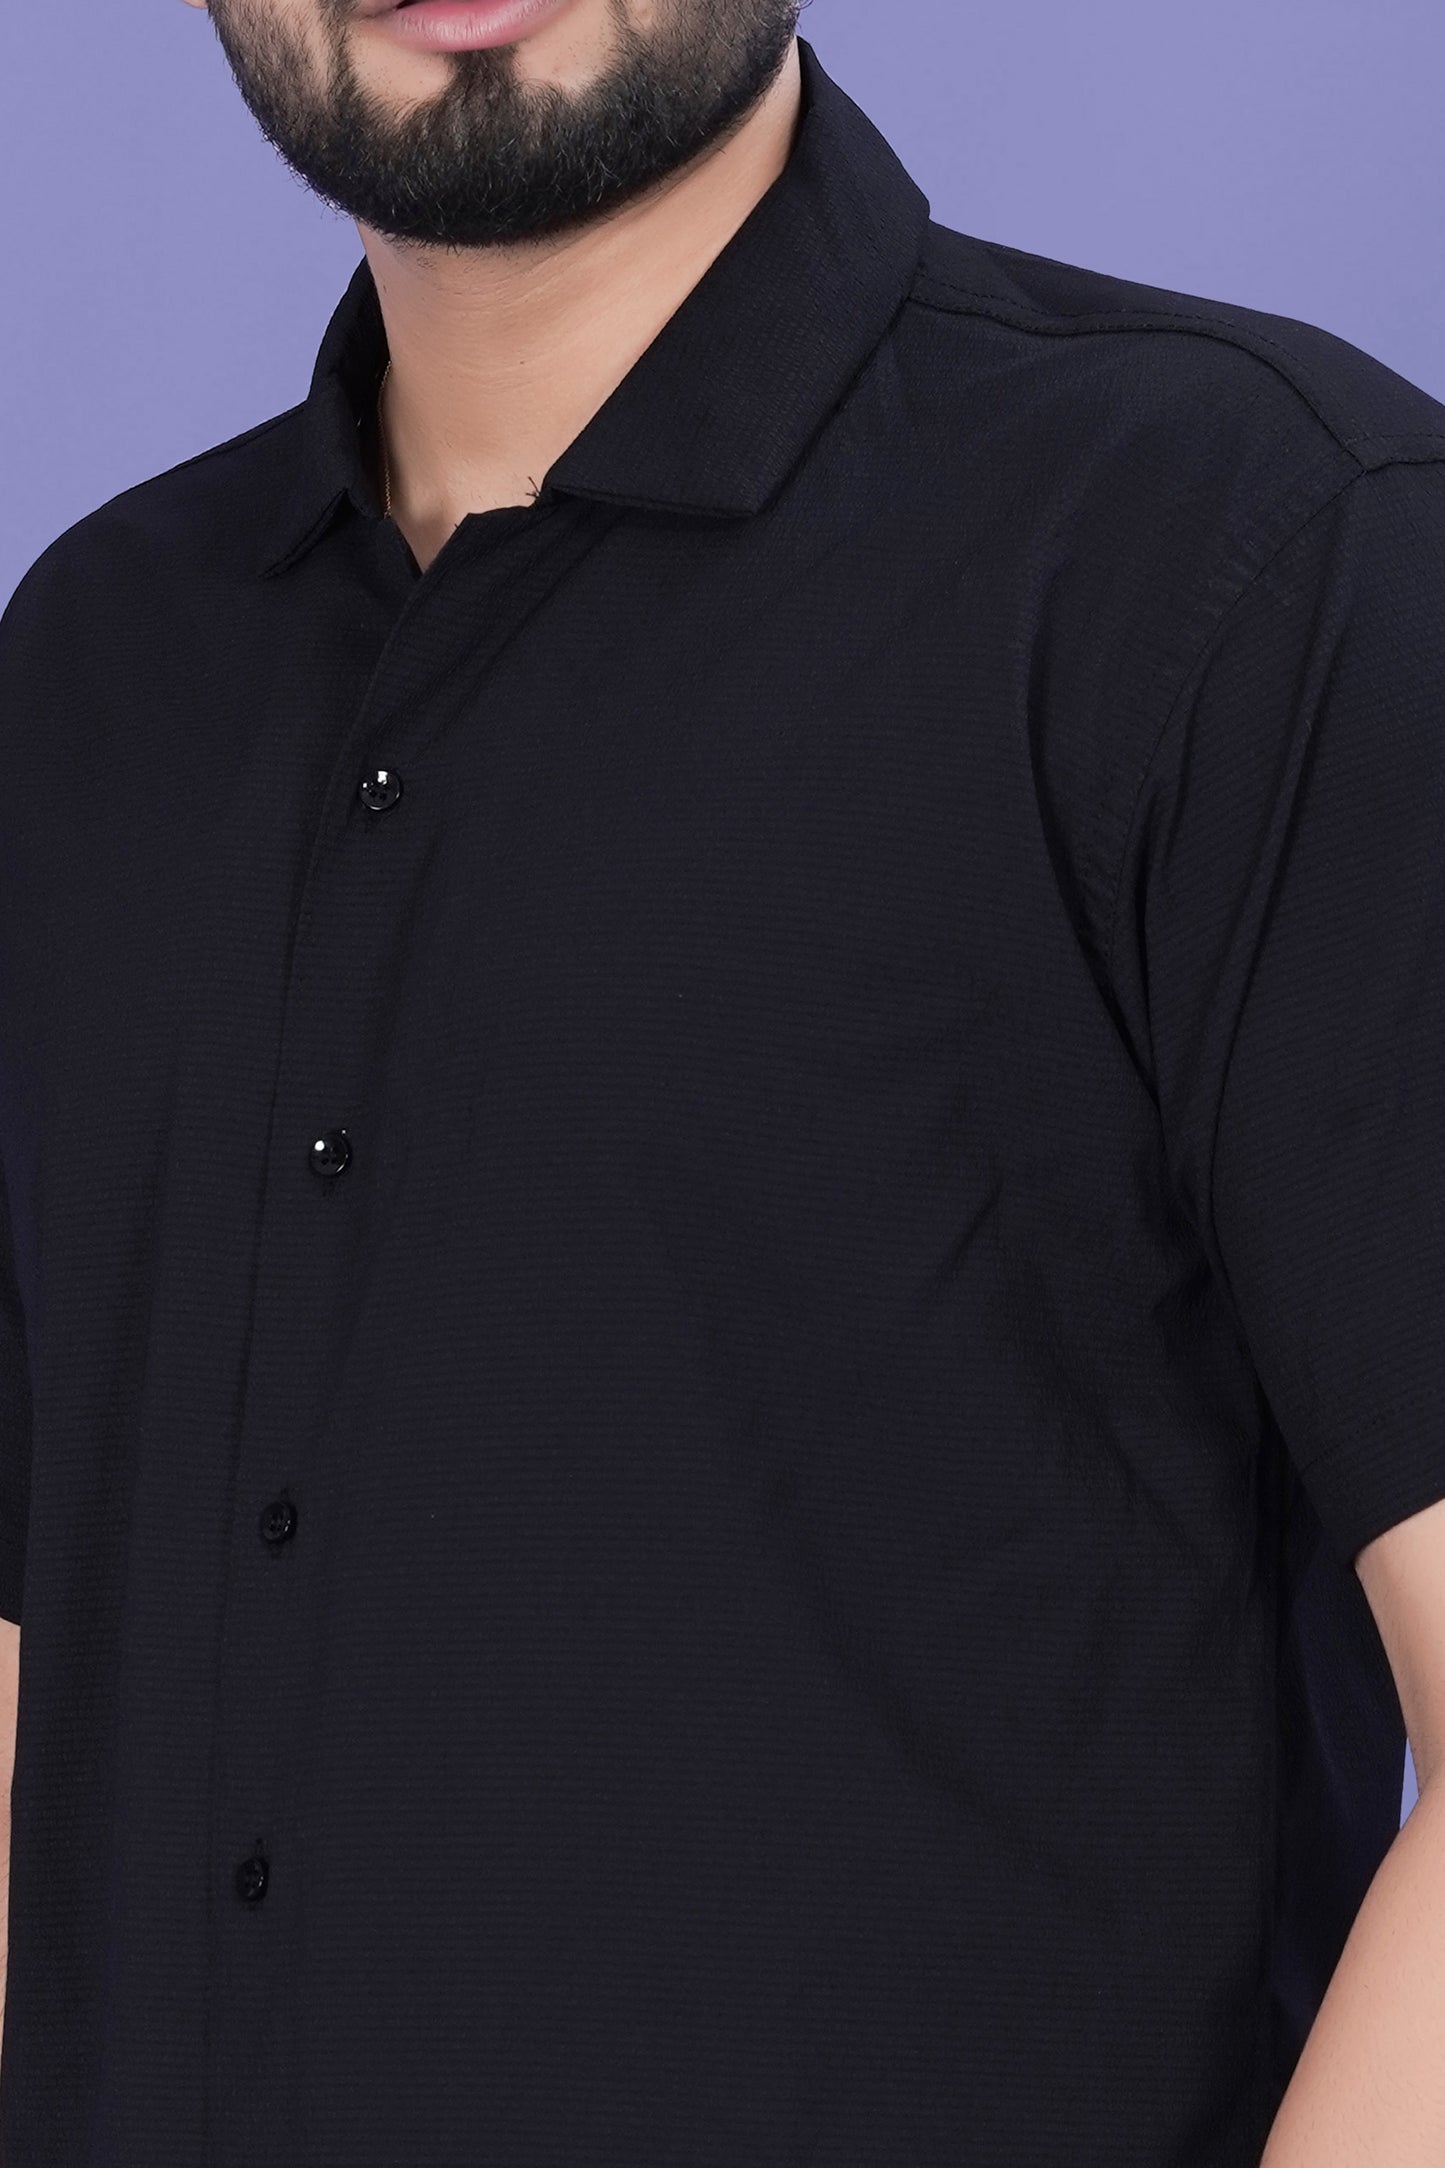 Black Half-Sleeves Men’s Casual Shirt